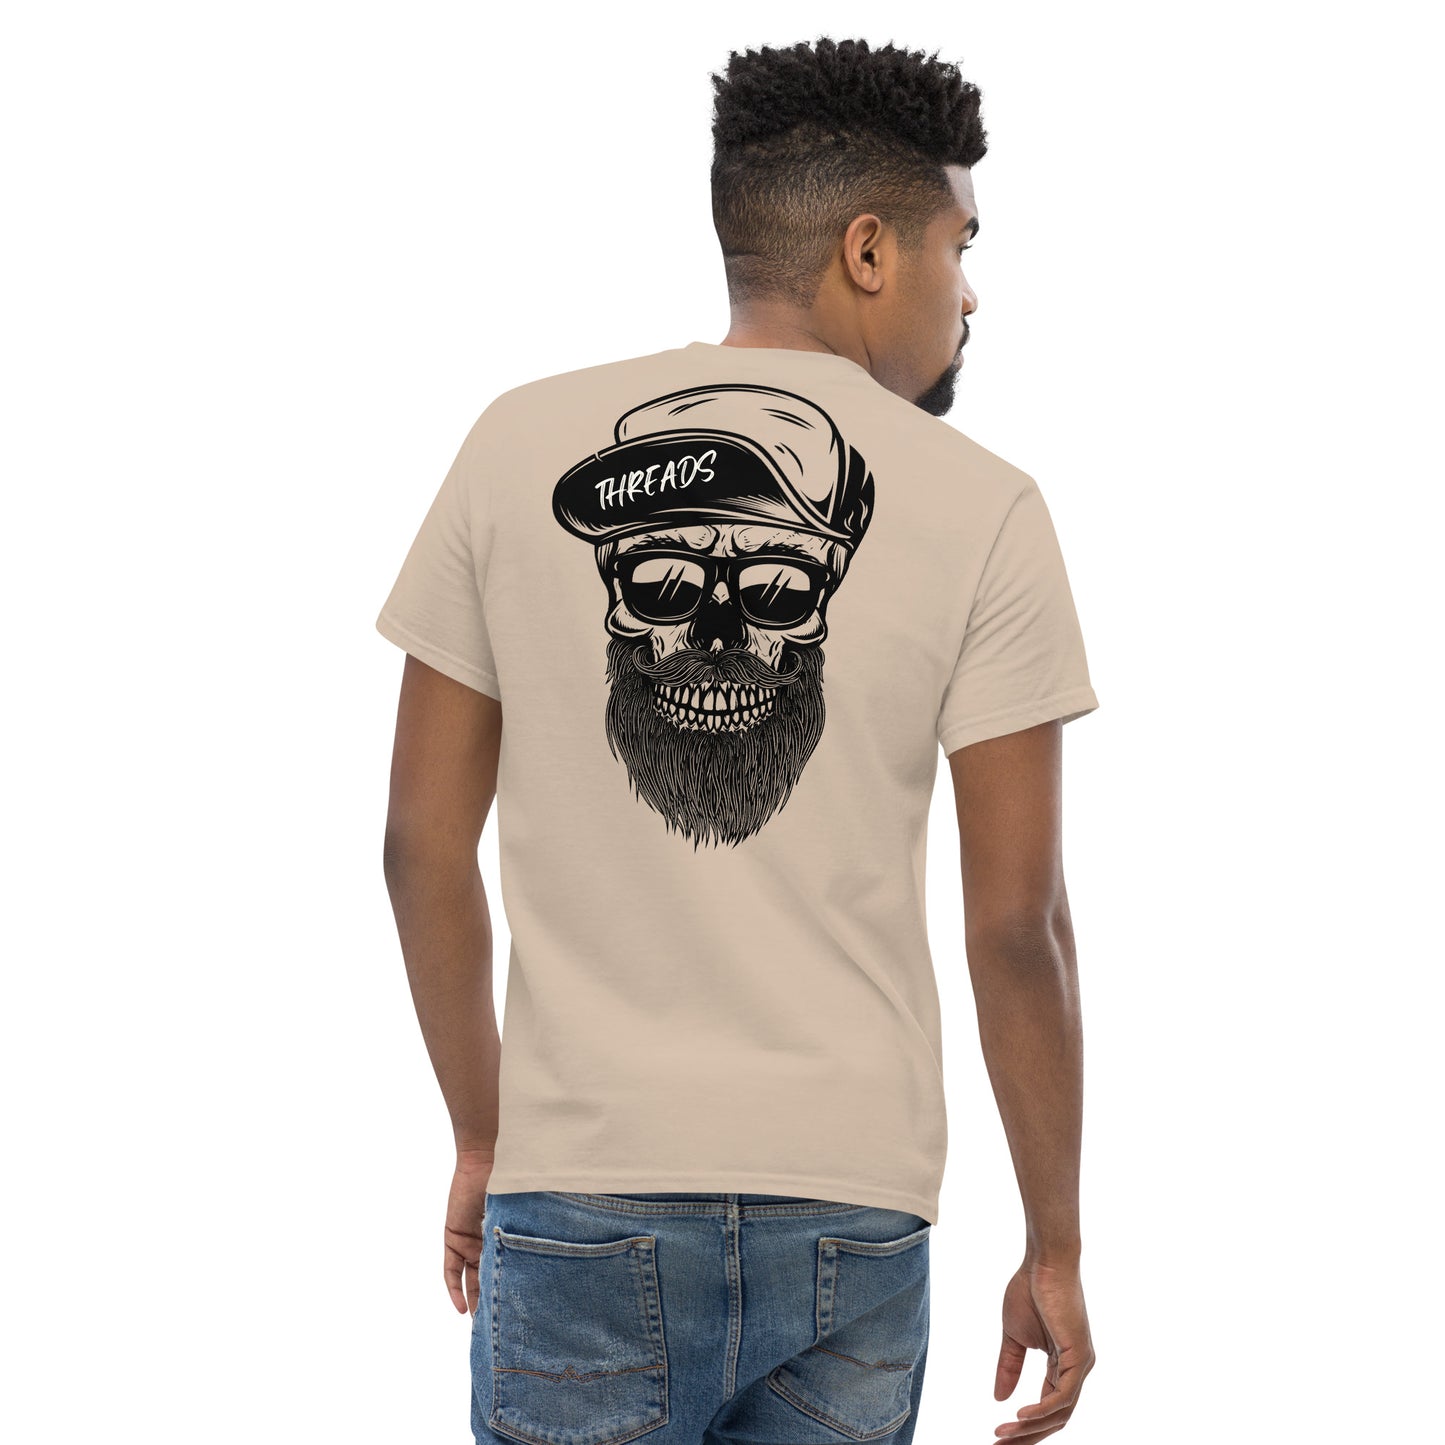 Beard Grylls T-shirt